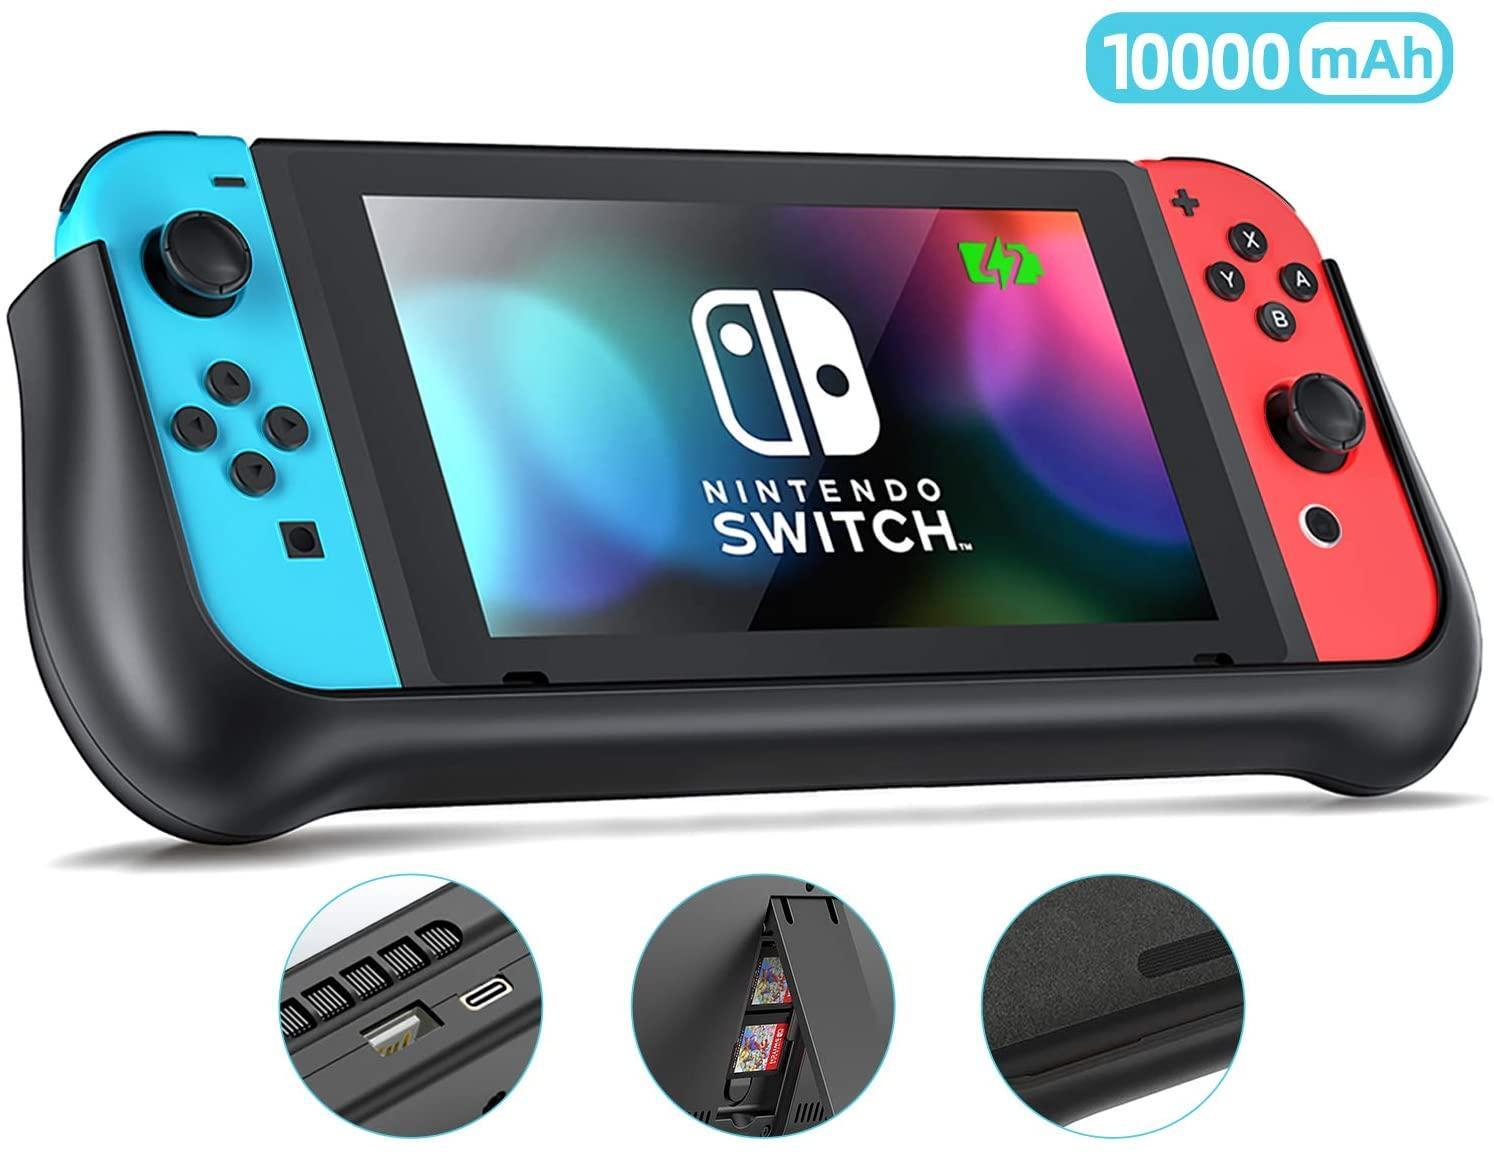 Portabel laddare kompatibel med Nintendo Switch - svart - Elgiganten